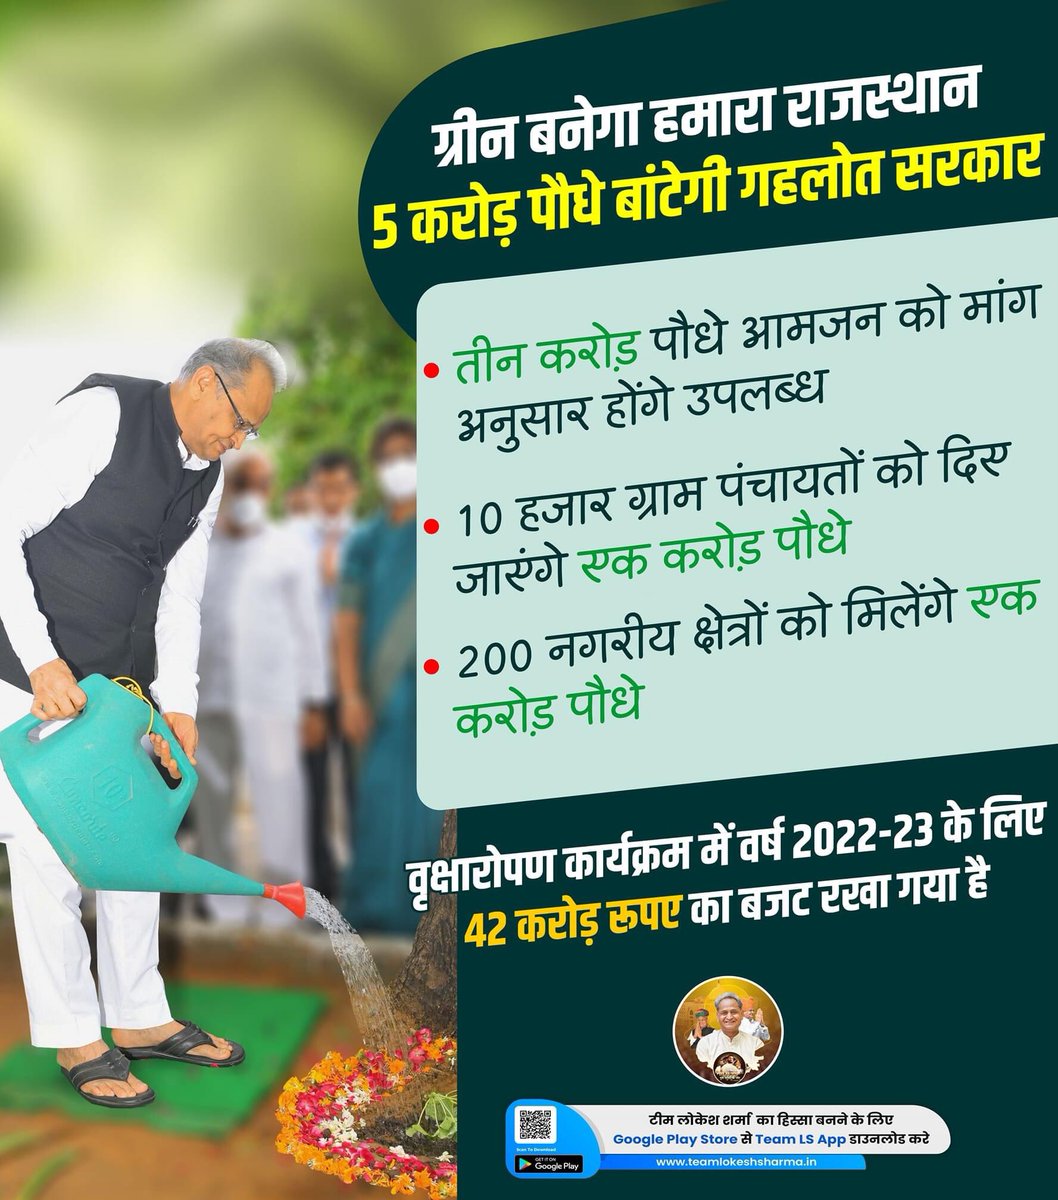 ग्रीन बनेगा हमारा राजस्थान, 5 करोड़ पौधे बांटेगी गहलोत सरकार। 

#GreenRajasthan